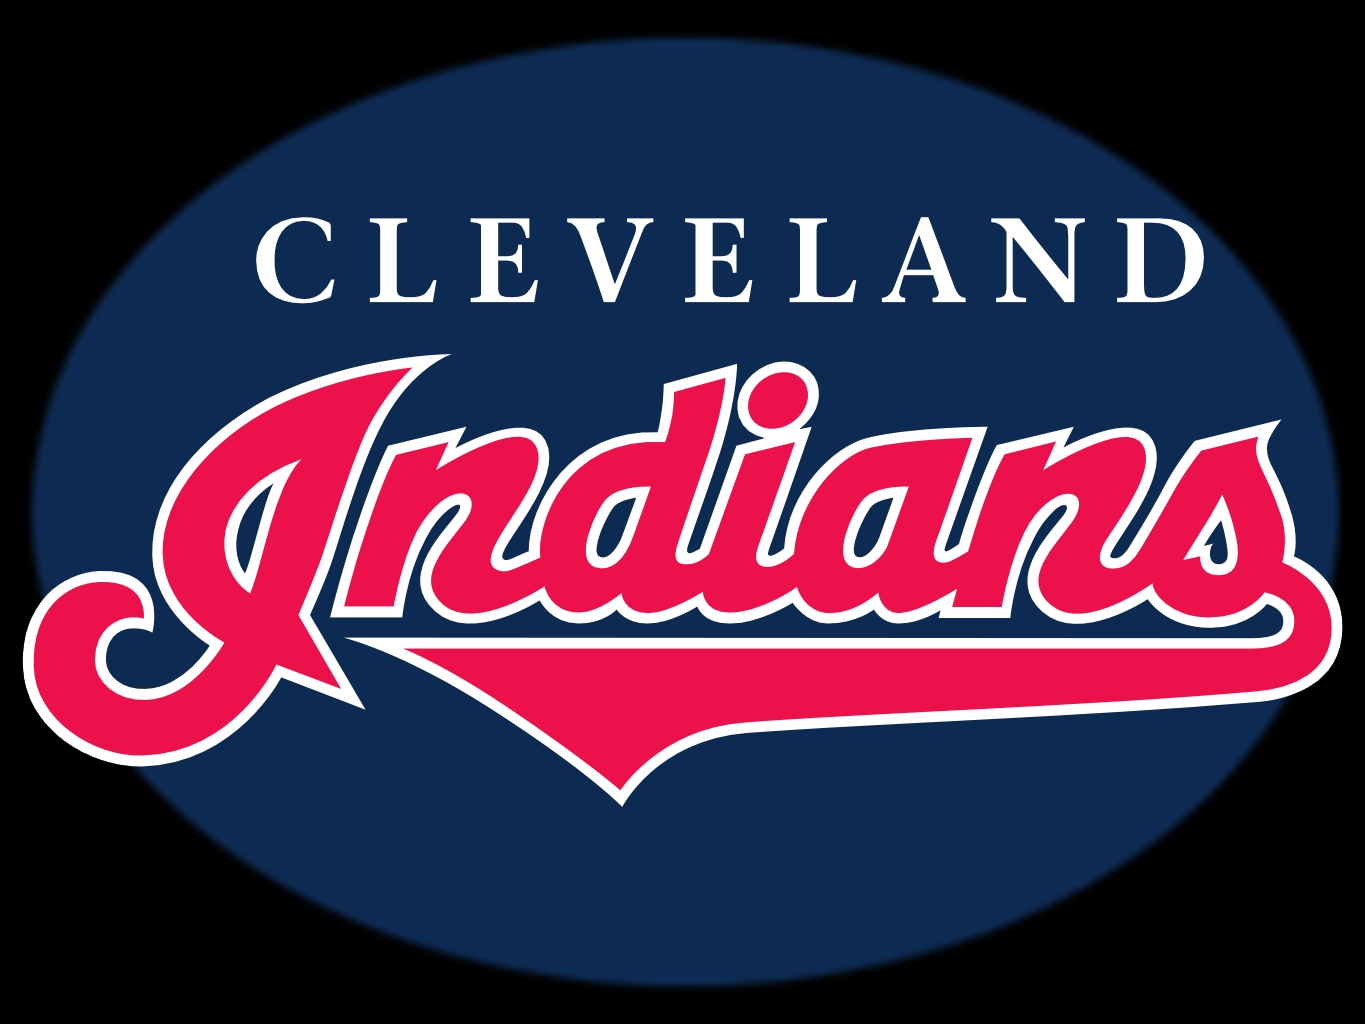 Cleveland Indians Wallpaper Background